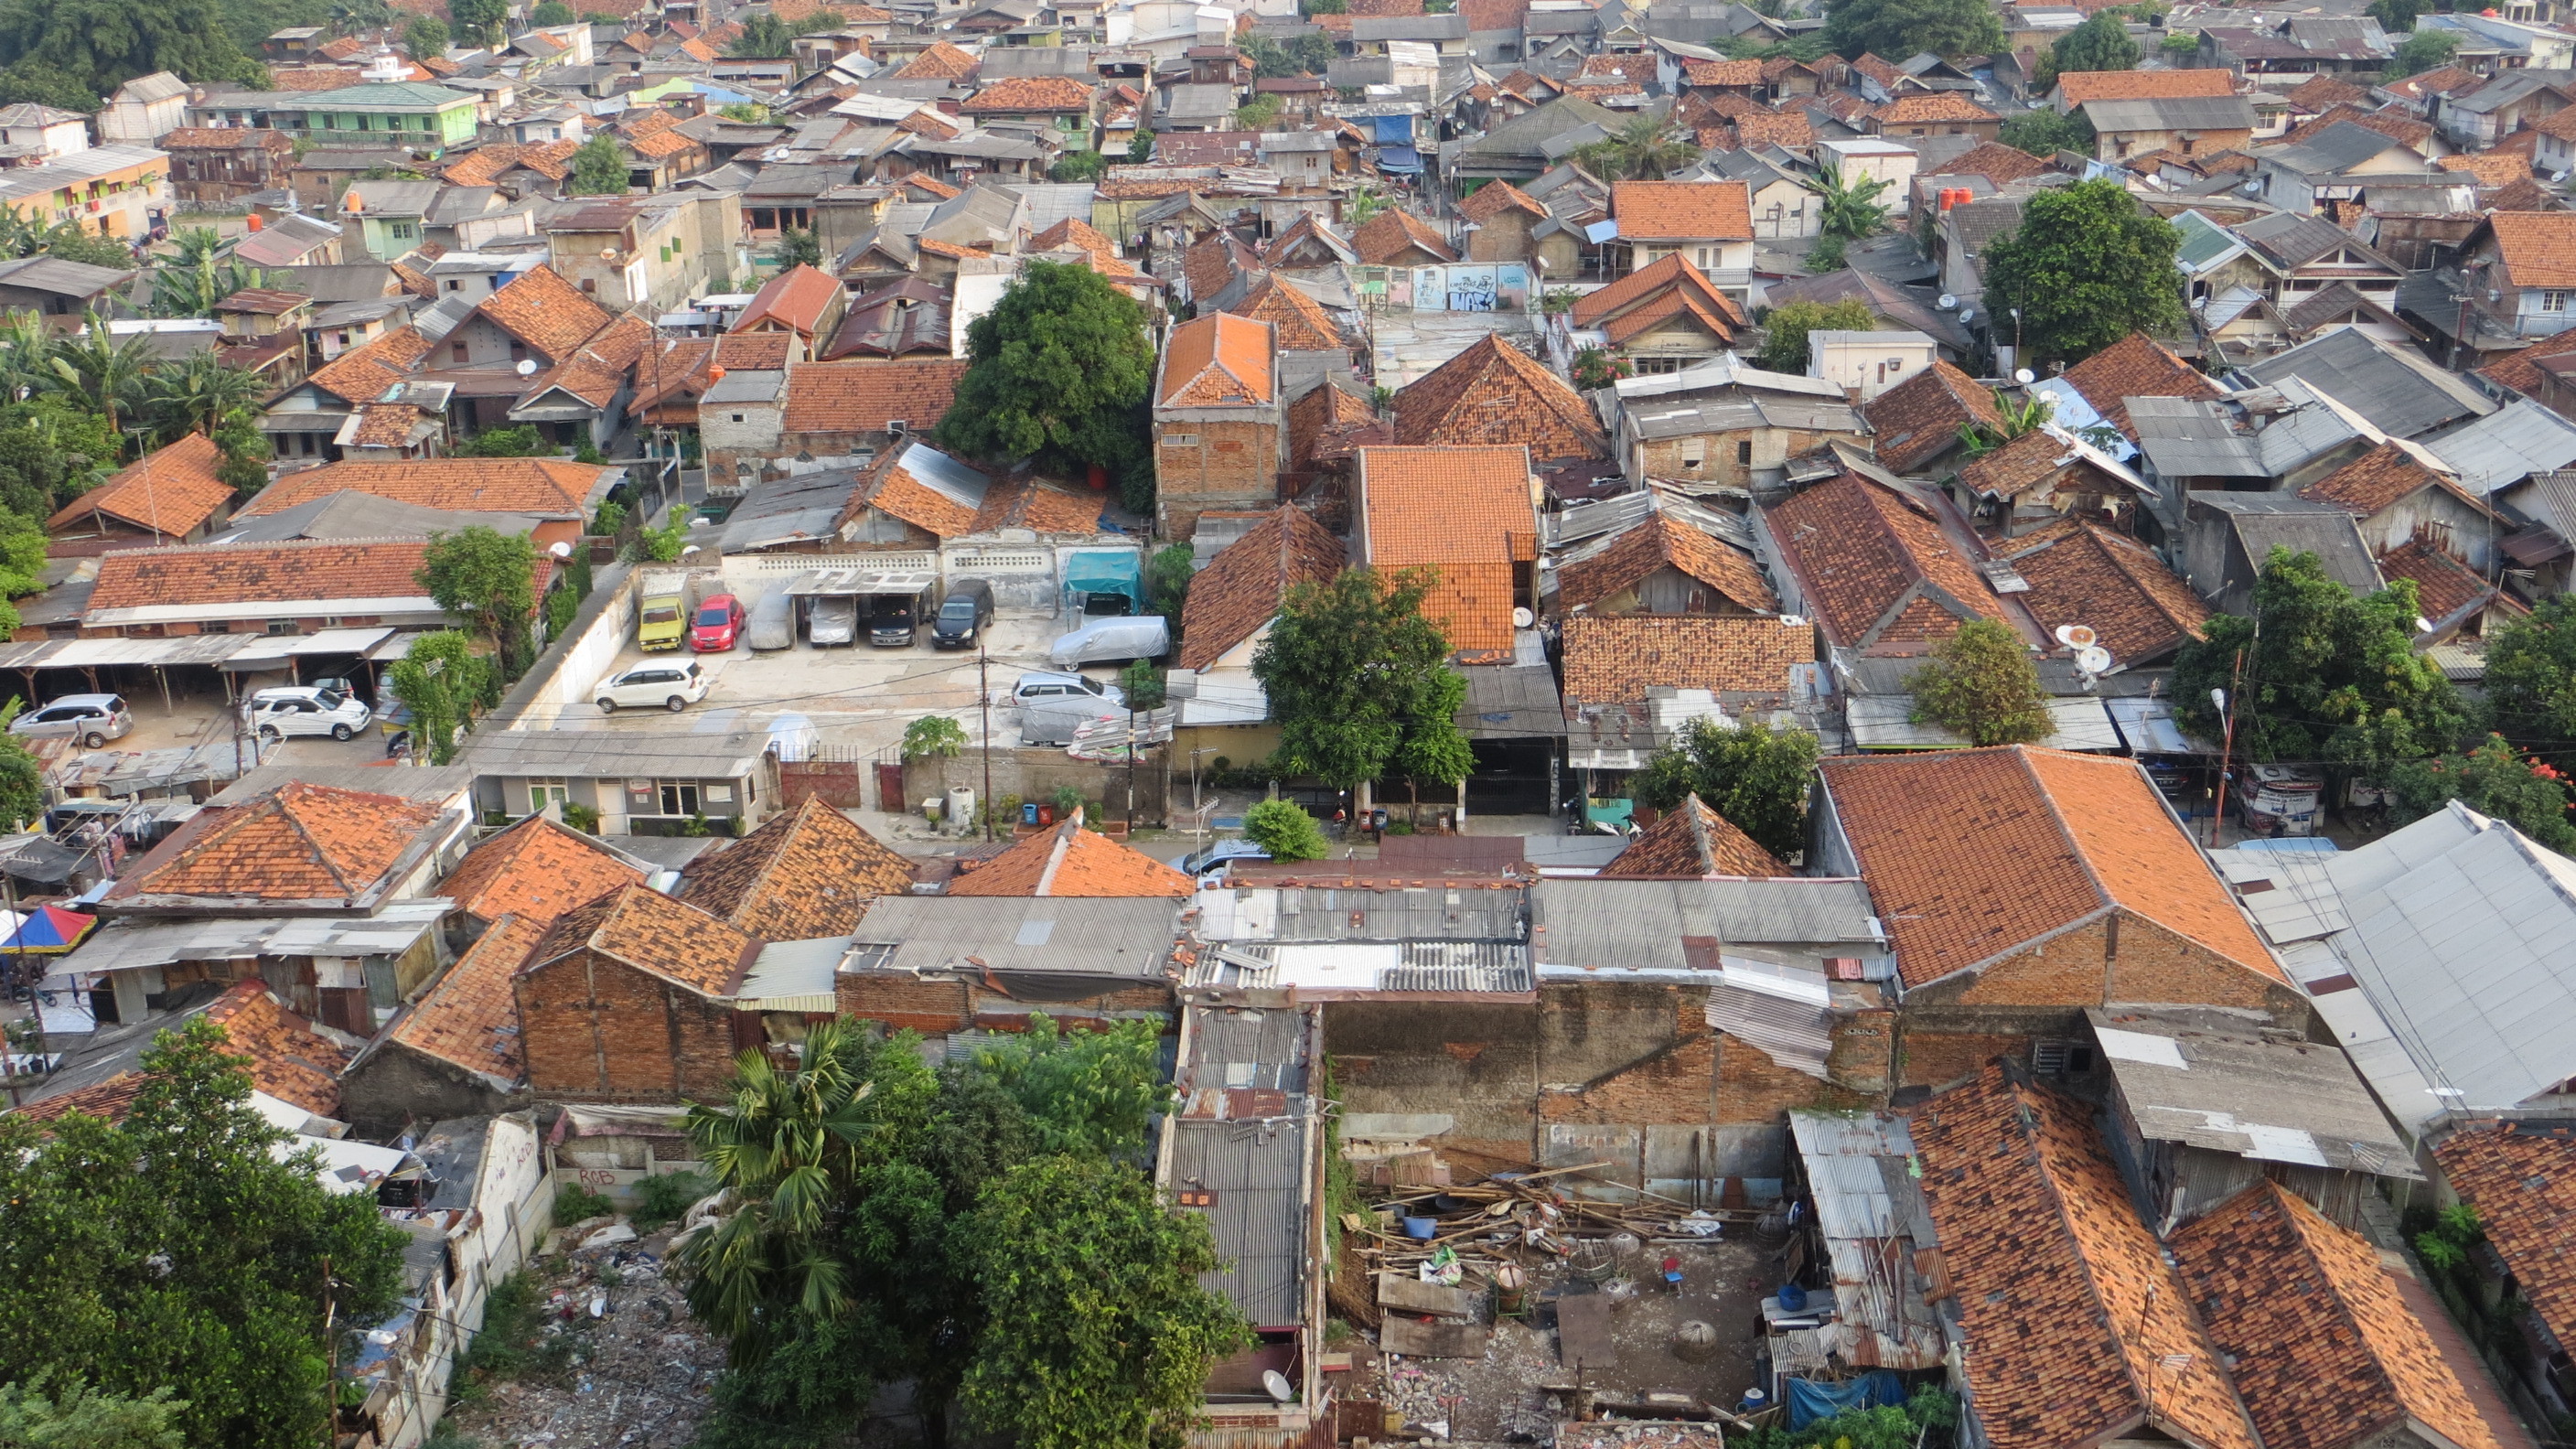  Jakarta  s Kampung  Tongkol Goes Green To Fight Eviction